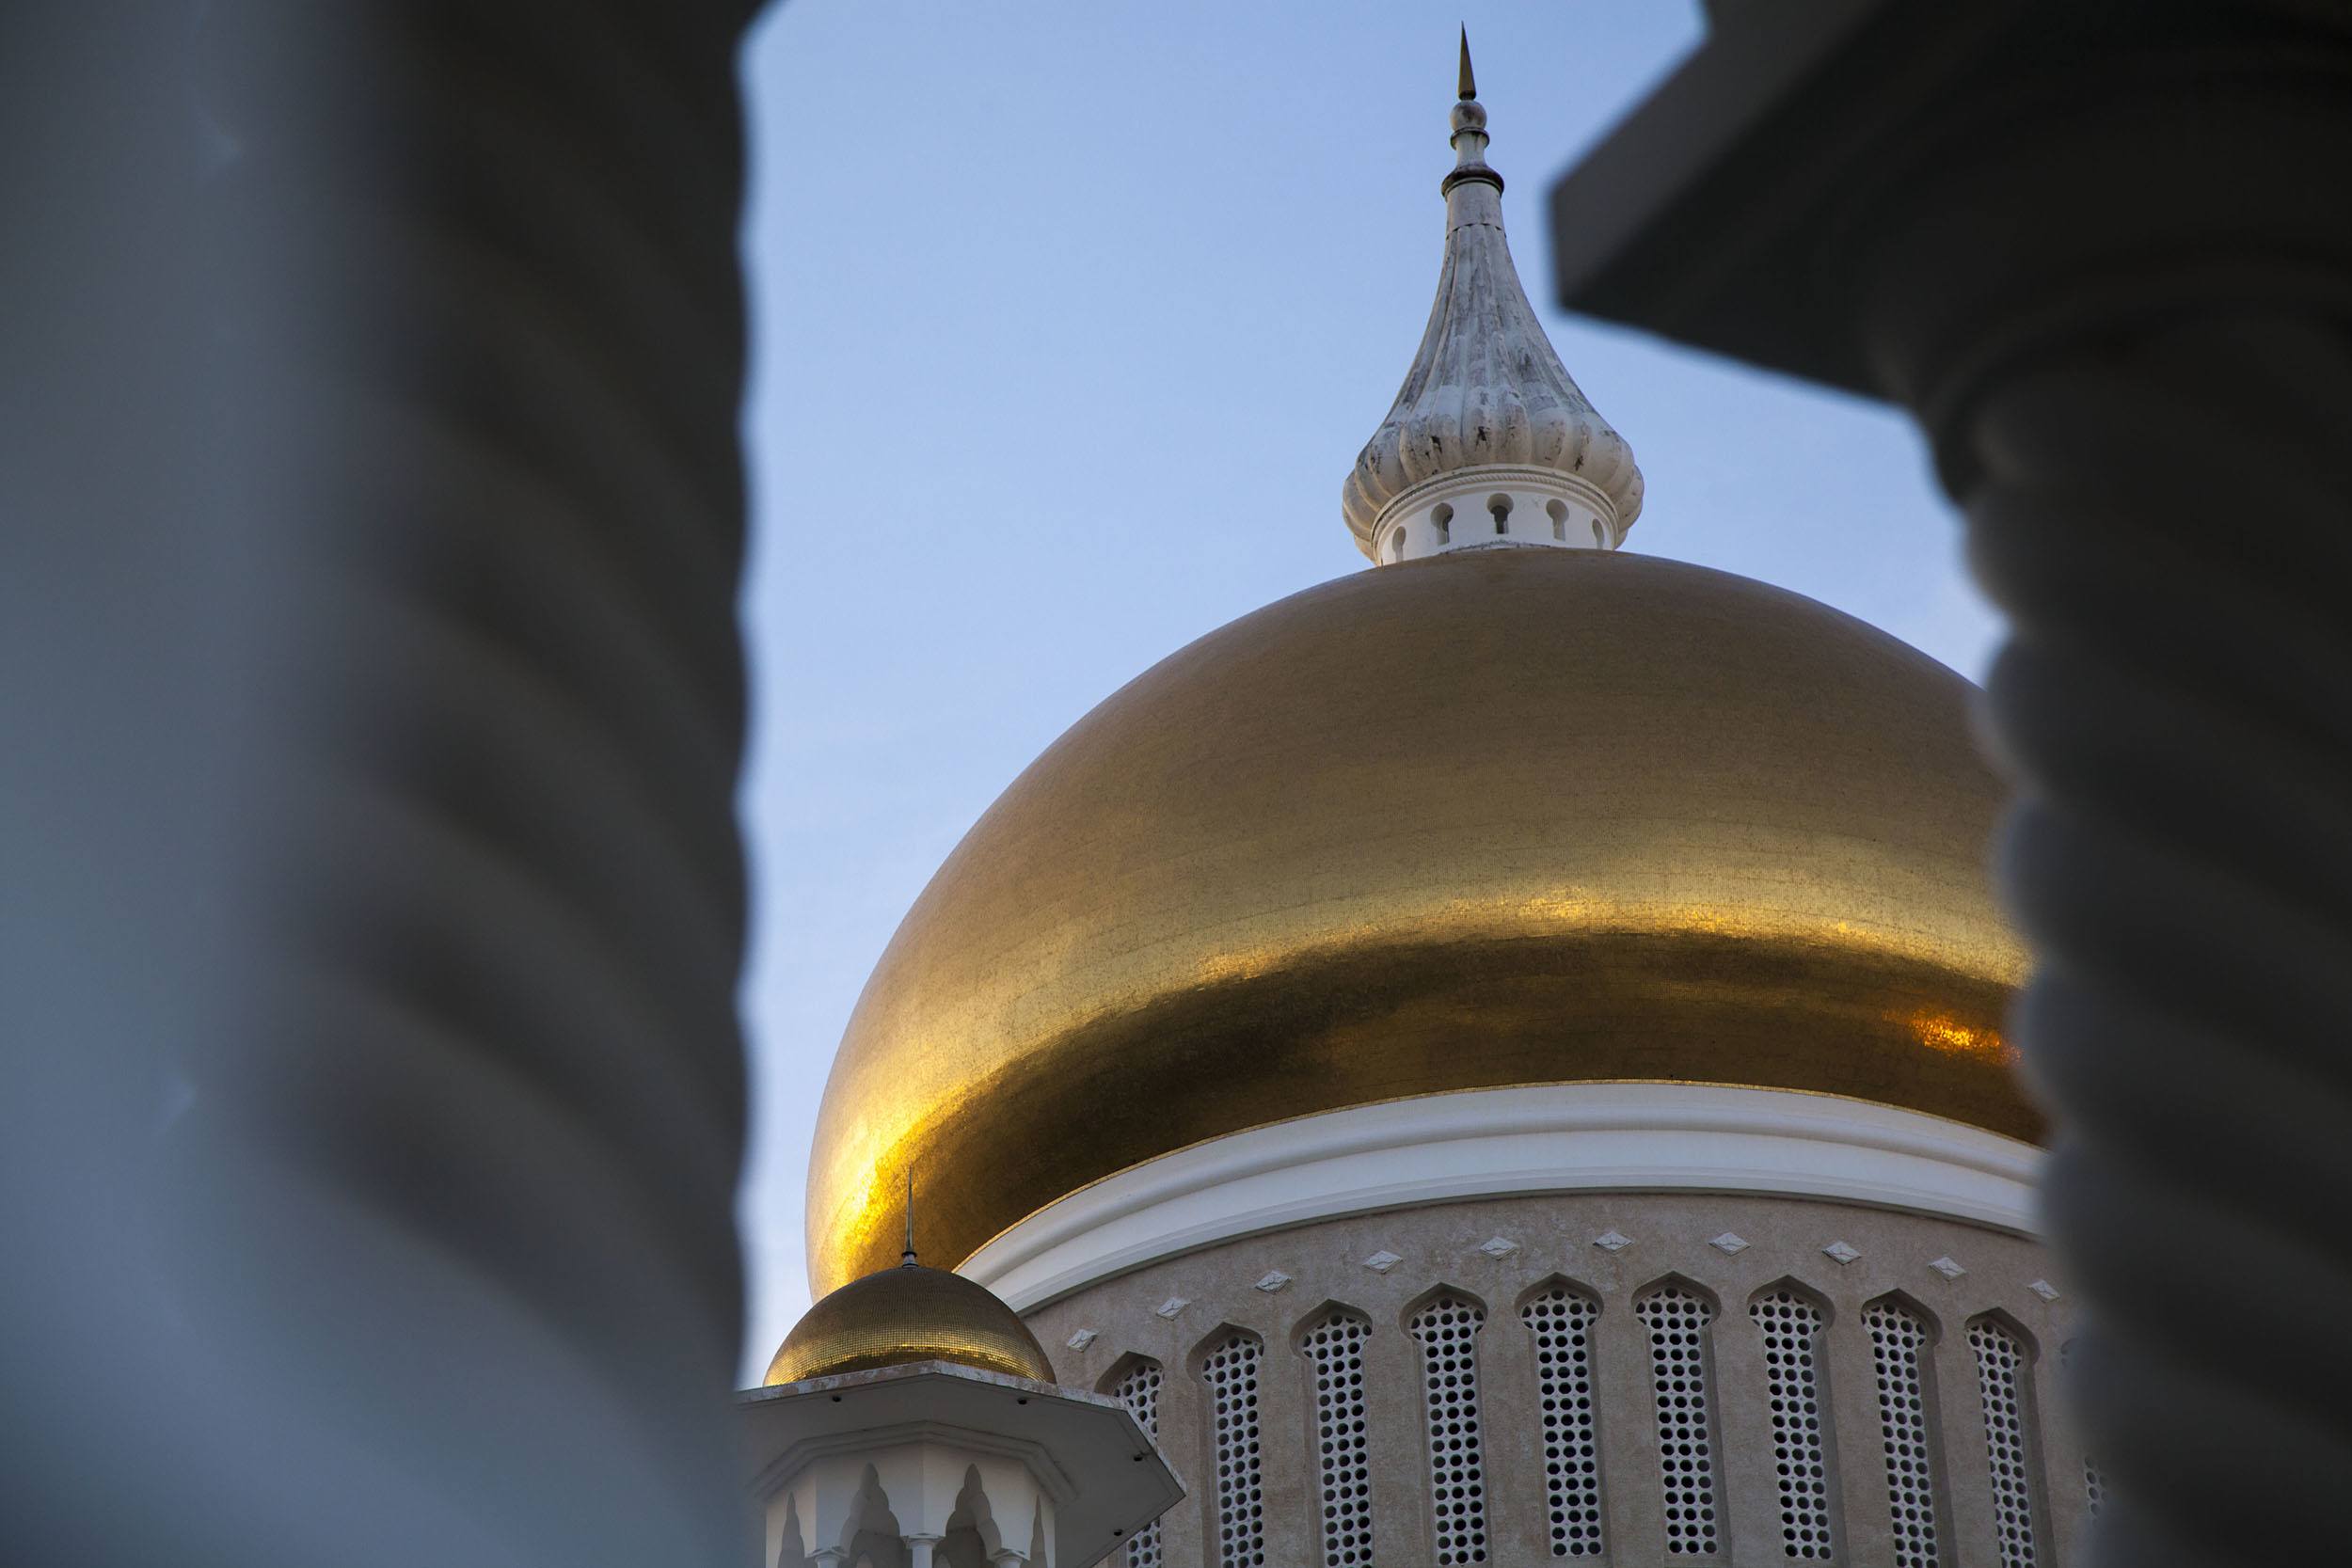 Gold dome of Masjid Omar Ali Saifuddien in Bandar Seri Begawan Brunei